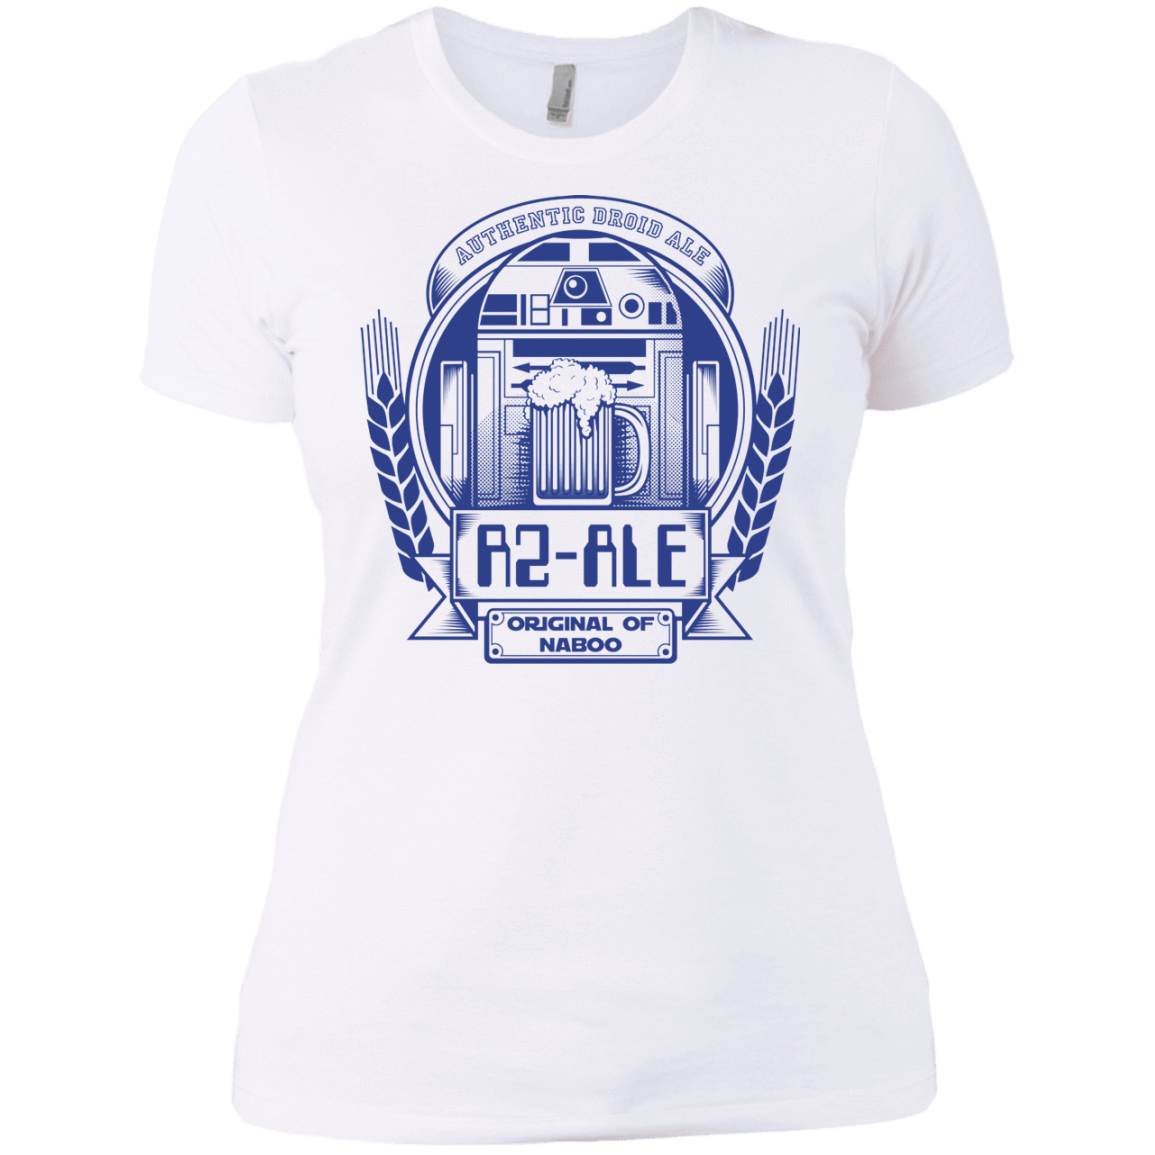 T-Shirts White / X-Small R2 Ale Women's Premium T-Shirt